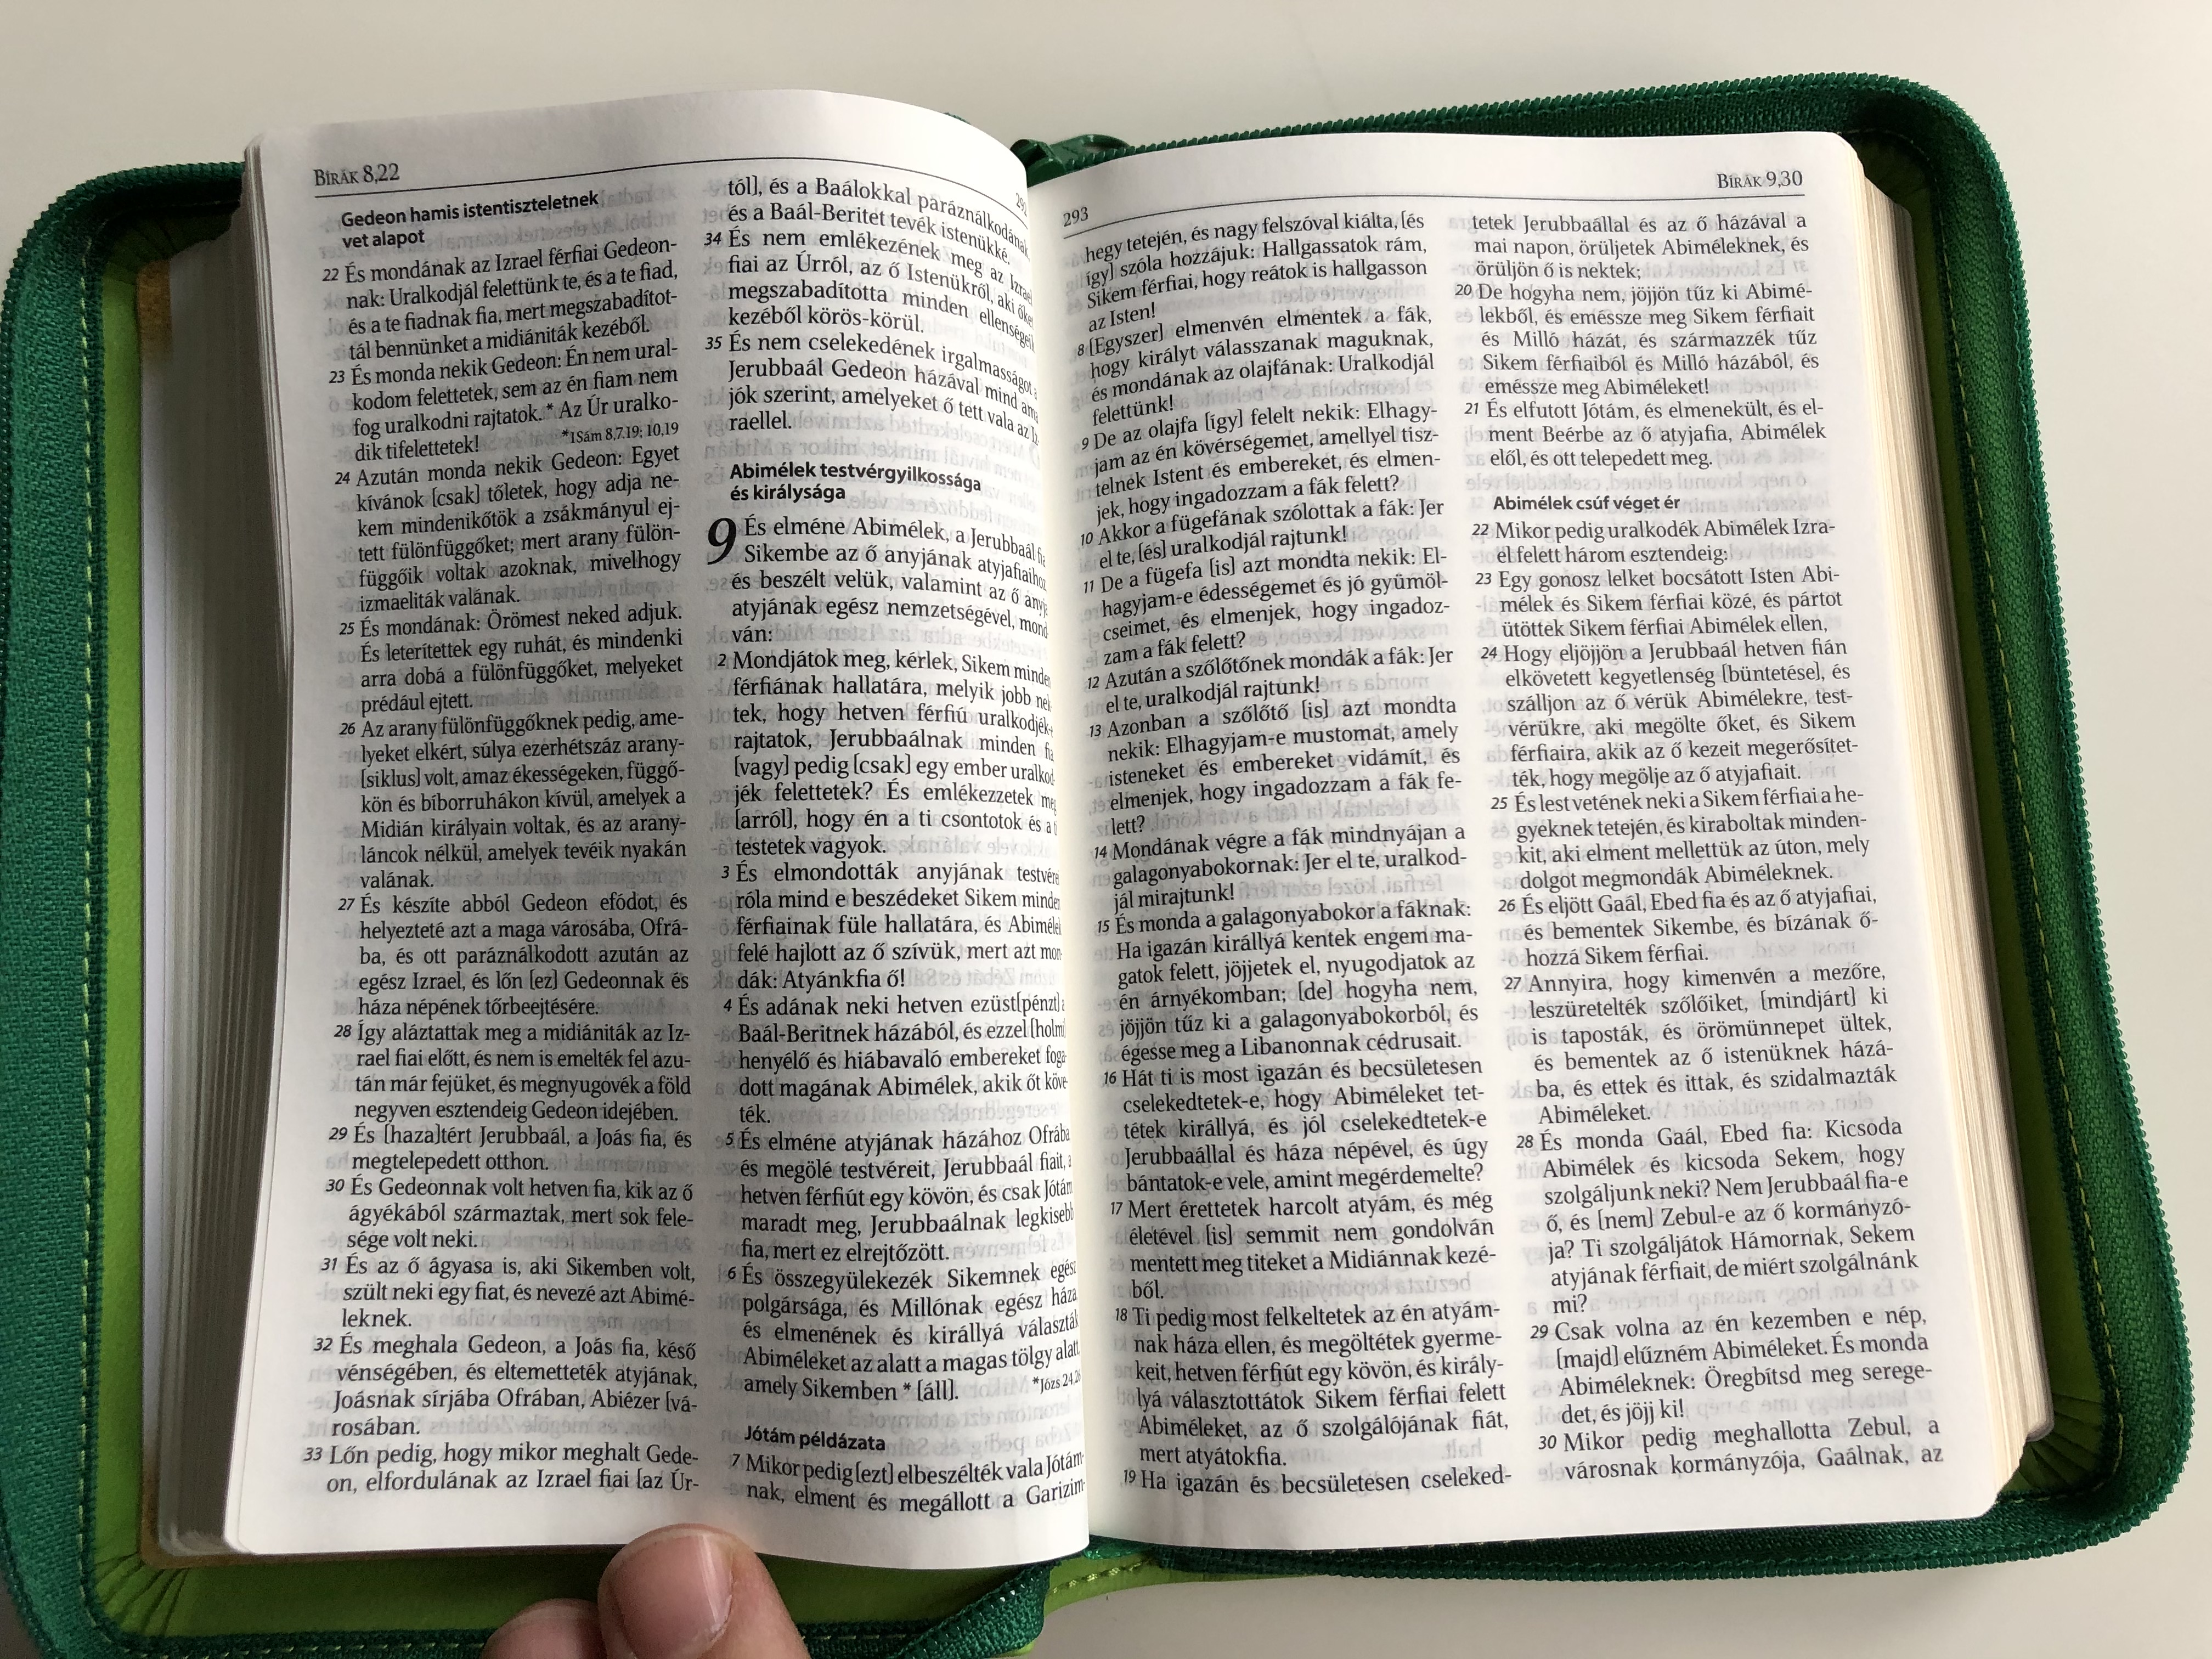 holy-bible-szent-biblia-apple-green-k-roli-g-sp-r-small-size-imitation-leather-with-zipper-7.jpg